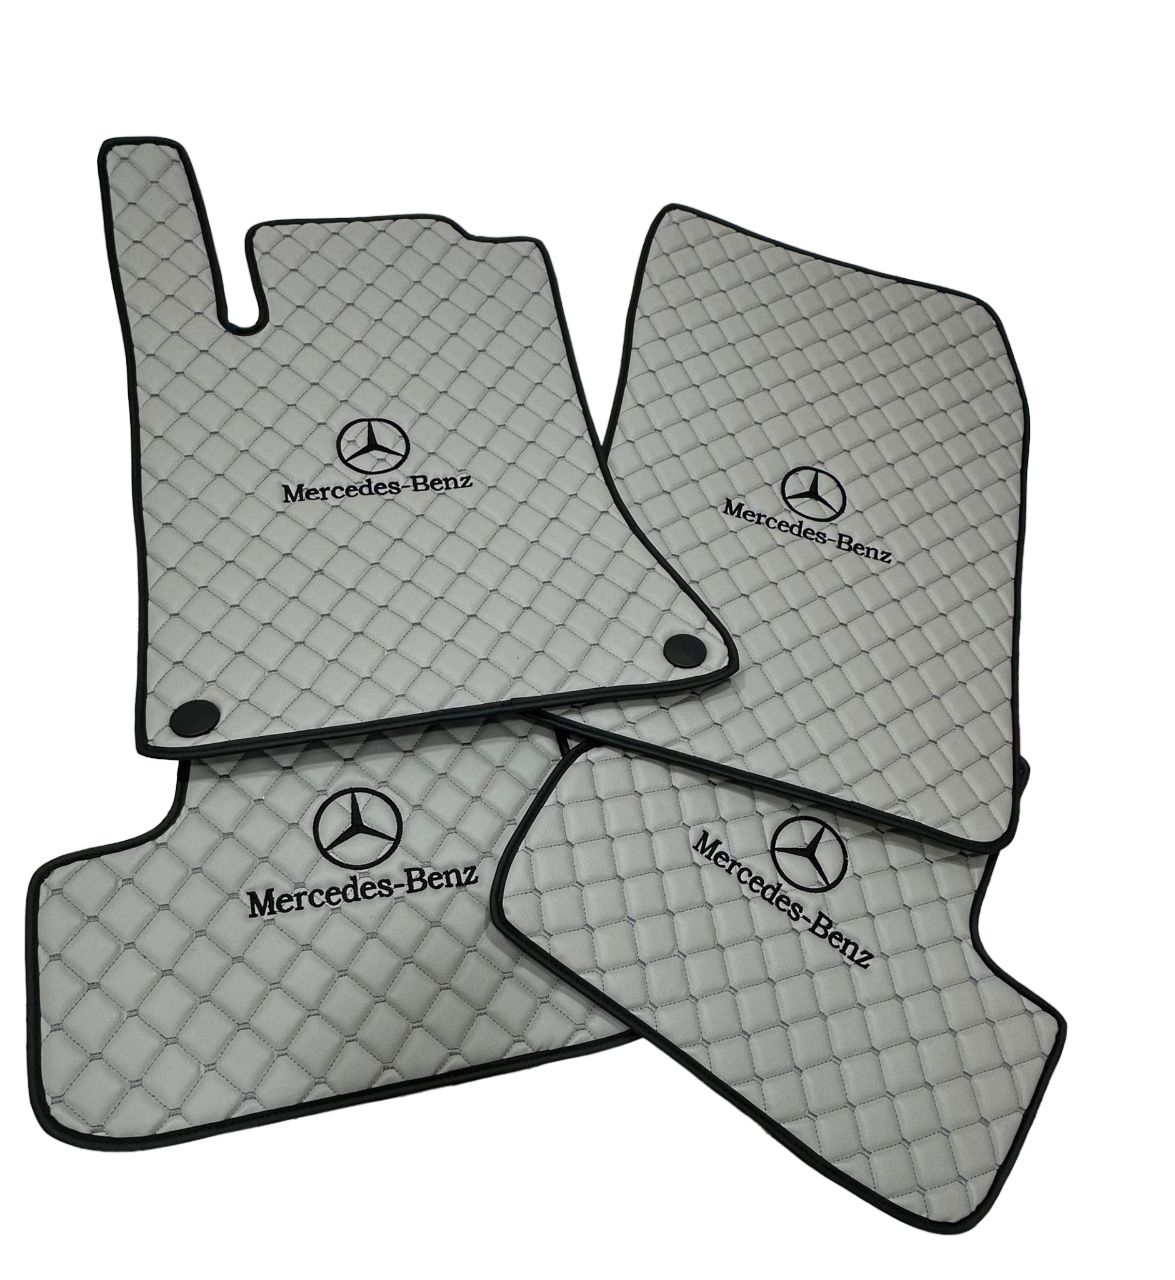 For Mercedes Benz EQC 2019-Onwards Model Special Design Leather Custom Car Mat 4x